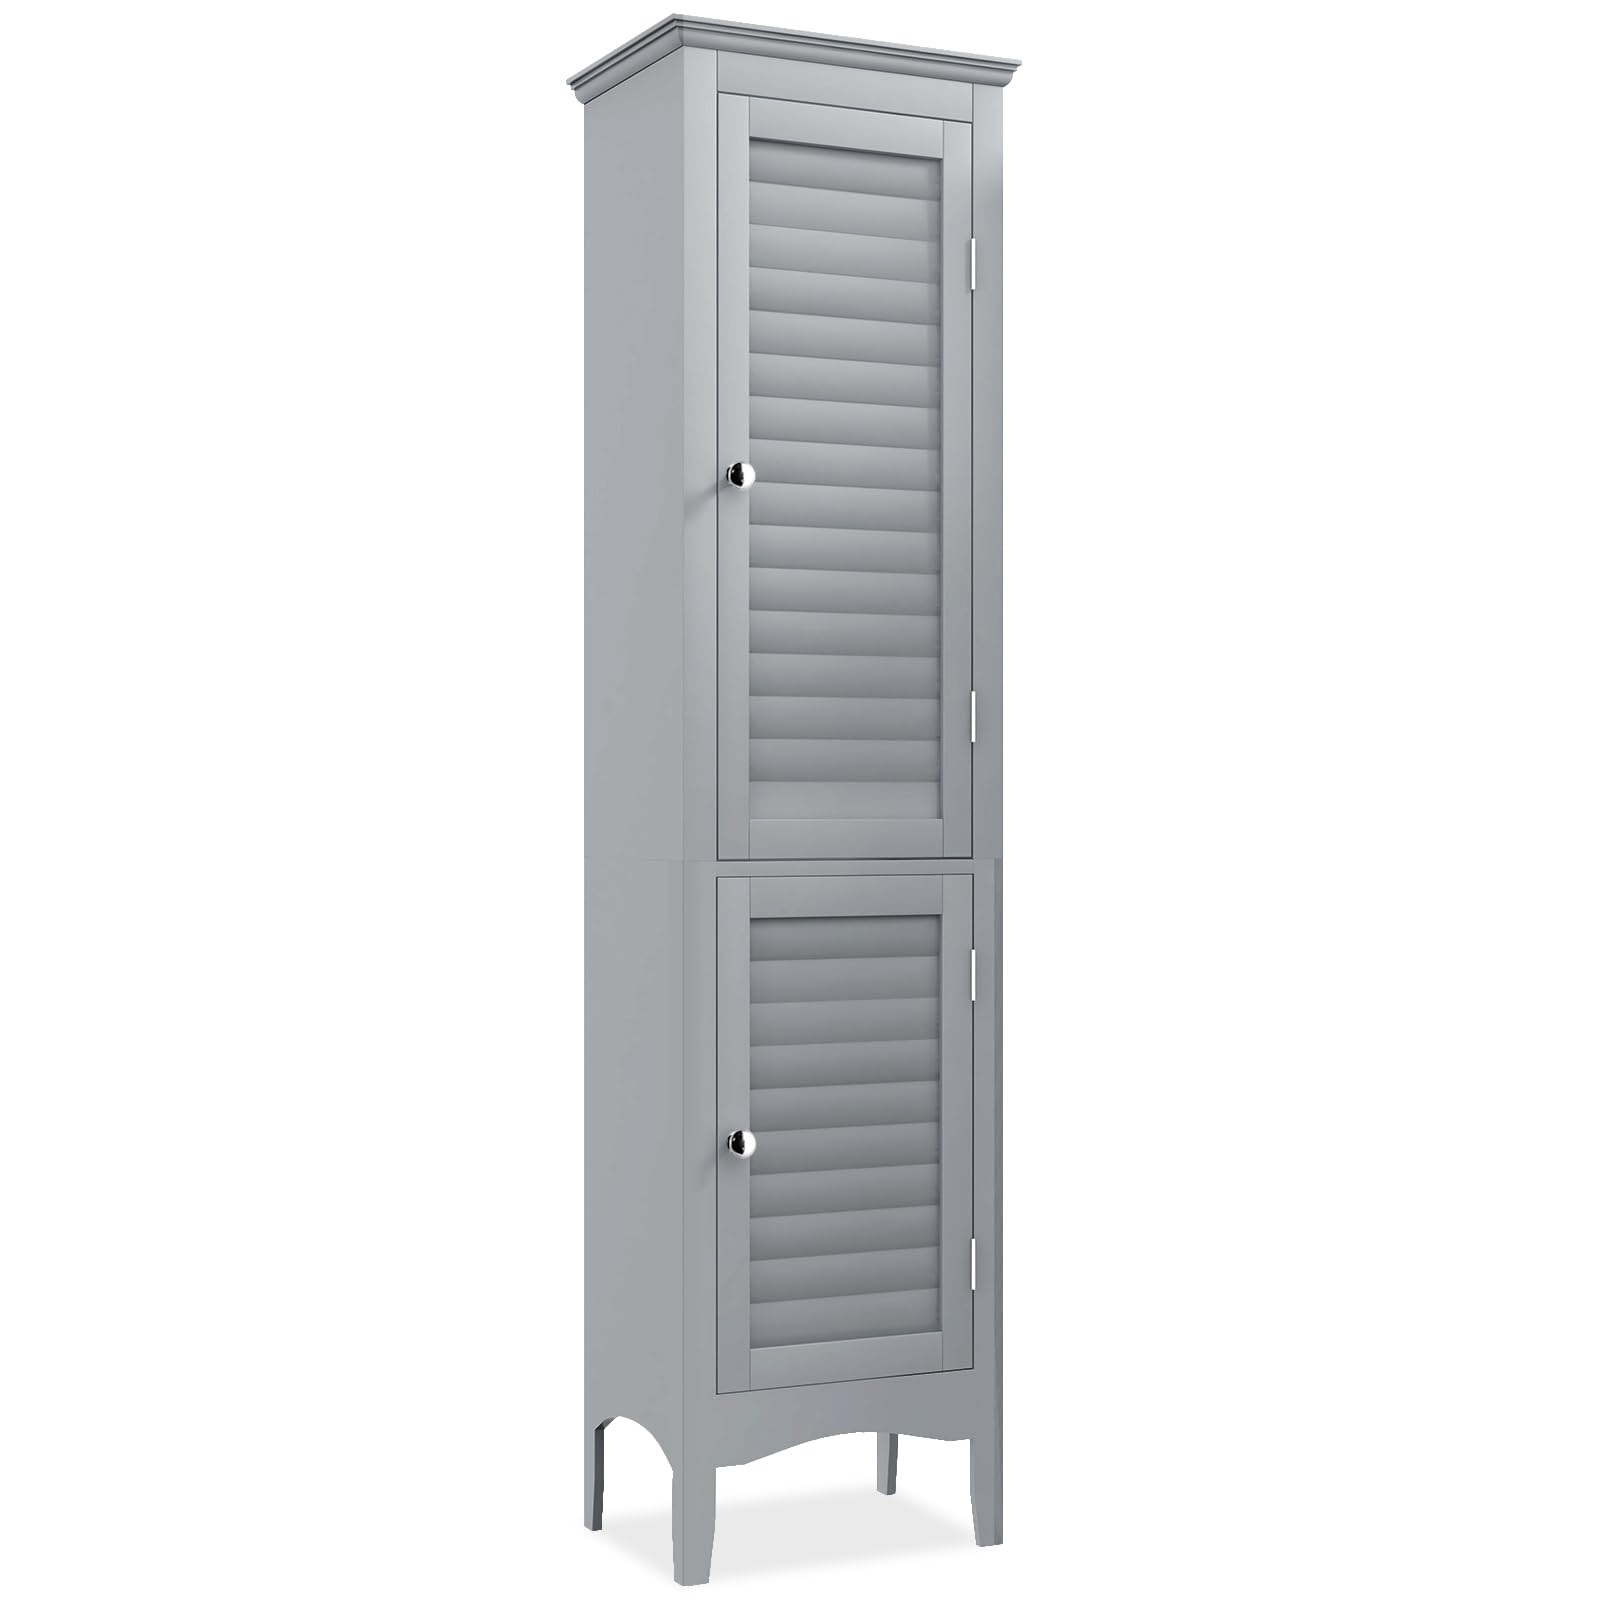 Giantex Bathroom Tall Storage Cabinet